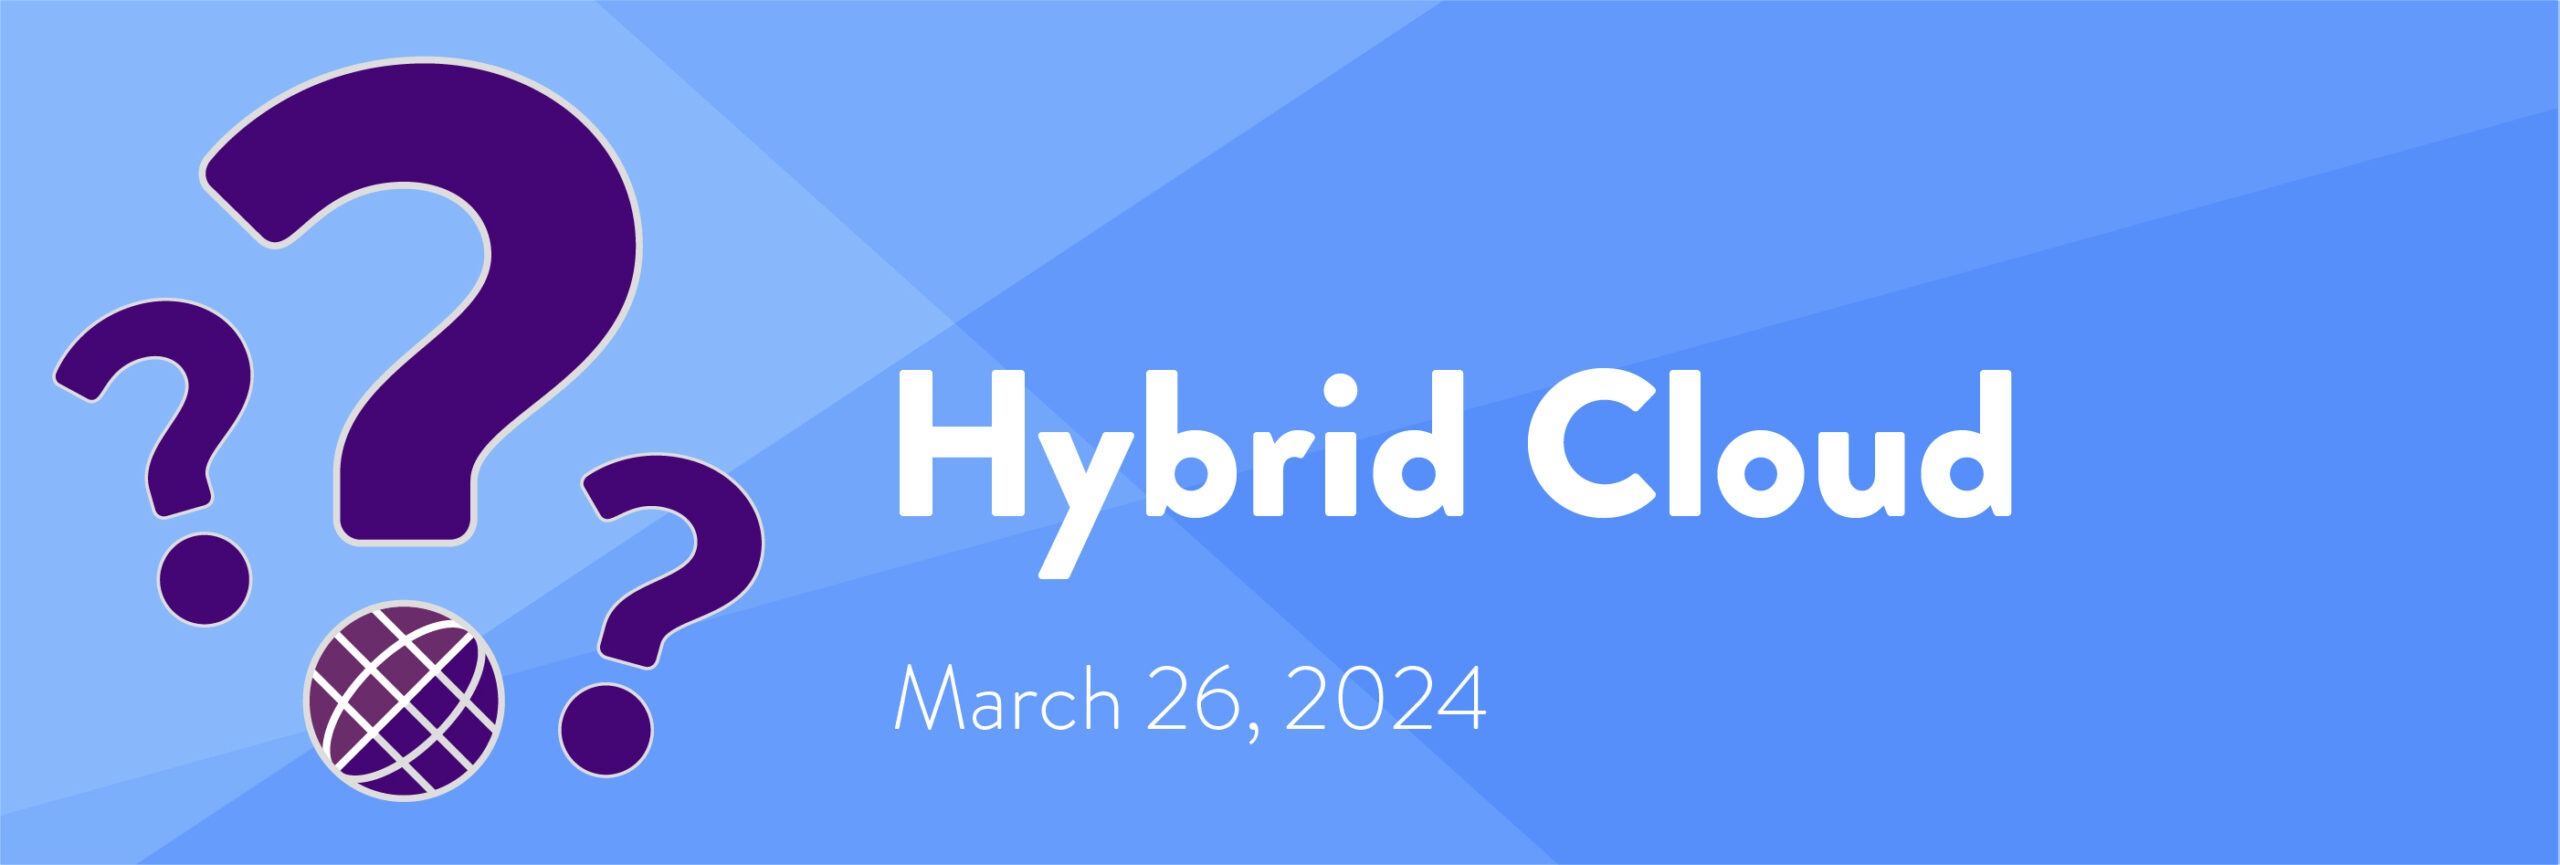 Hybrid Cloud Trivia